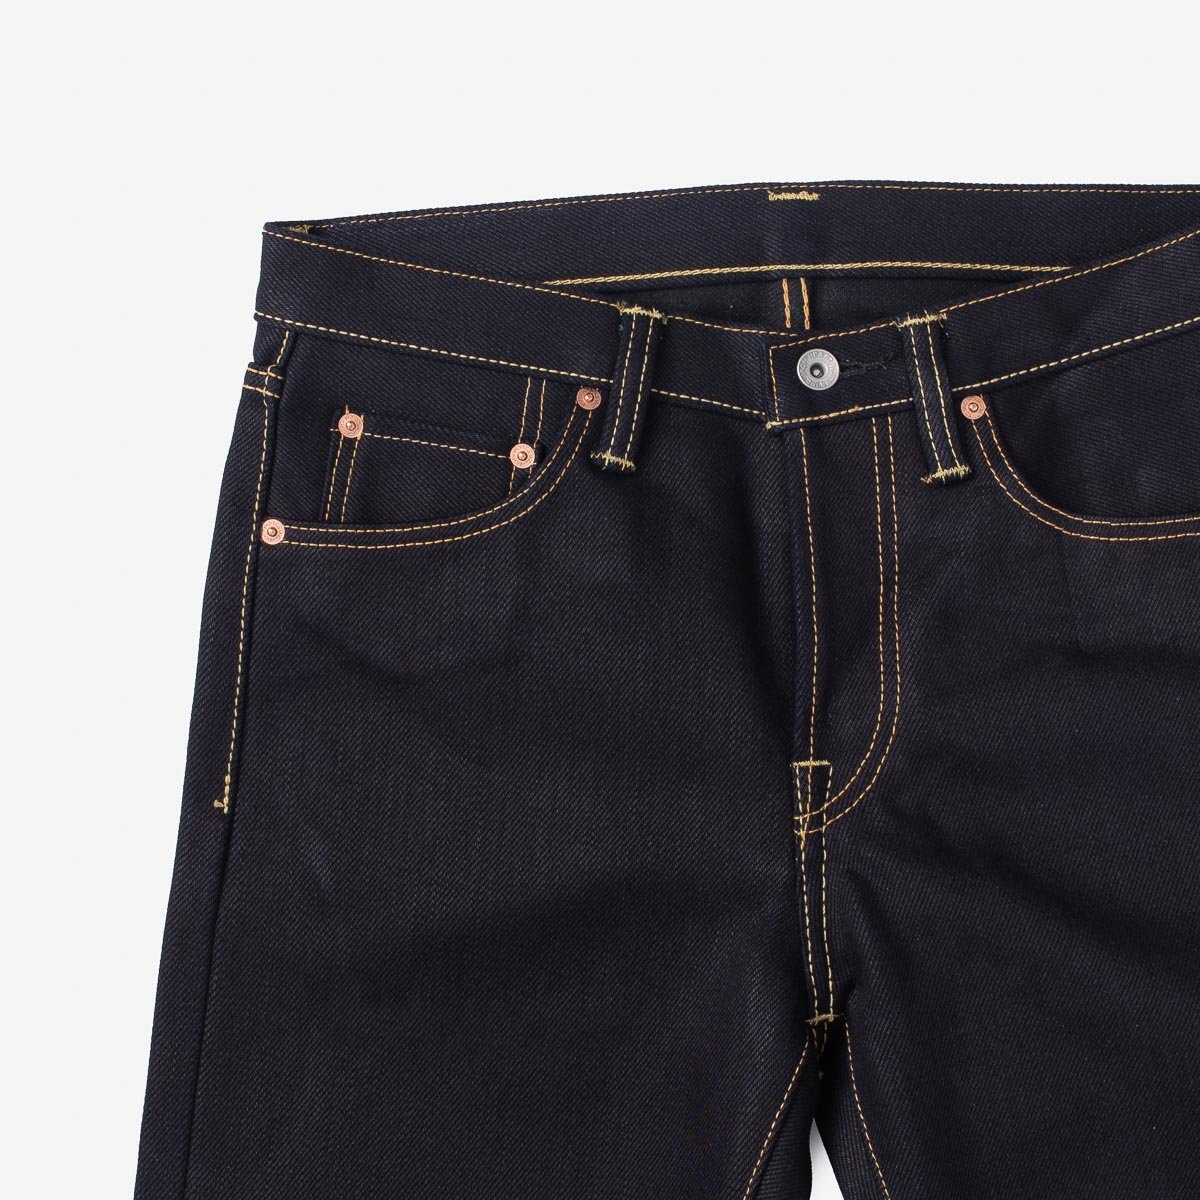 IH-666-XHSib 25oz Selvedge Denim Slim Straight Cut Jeans - Indigo/Black - 6